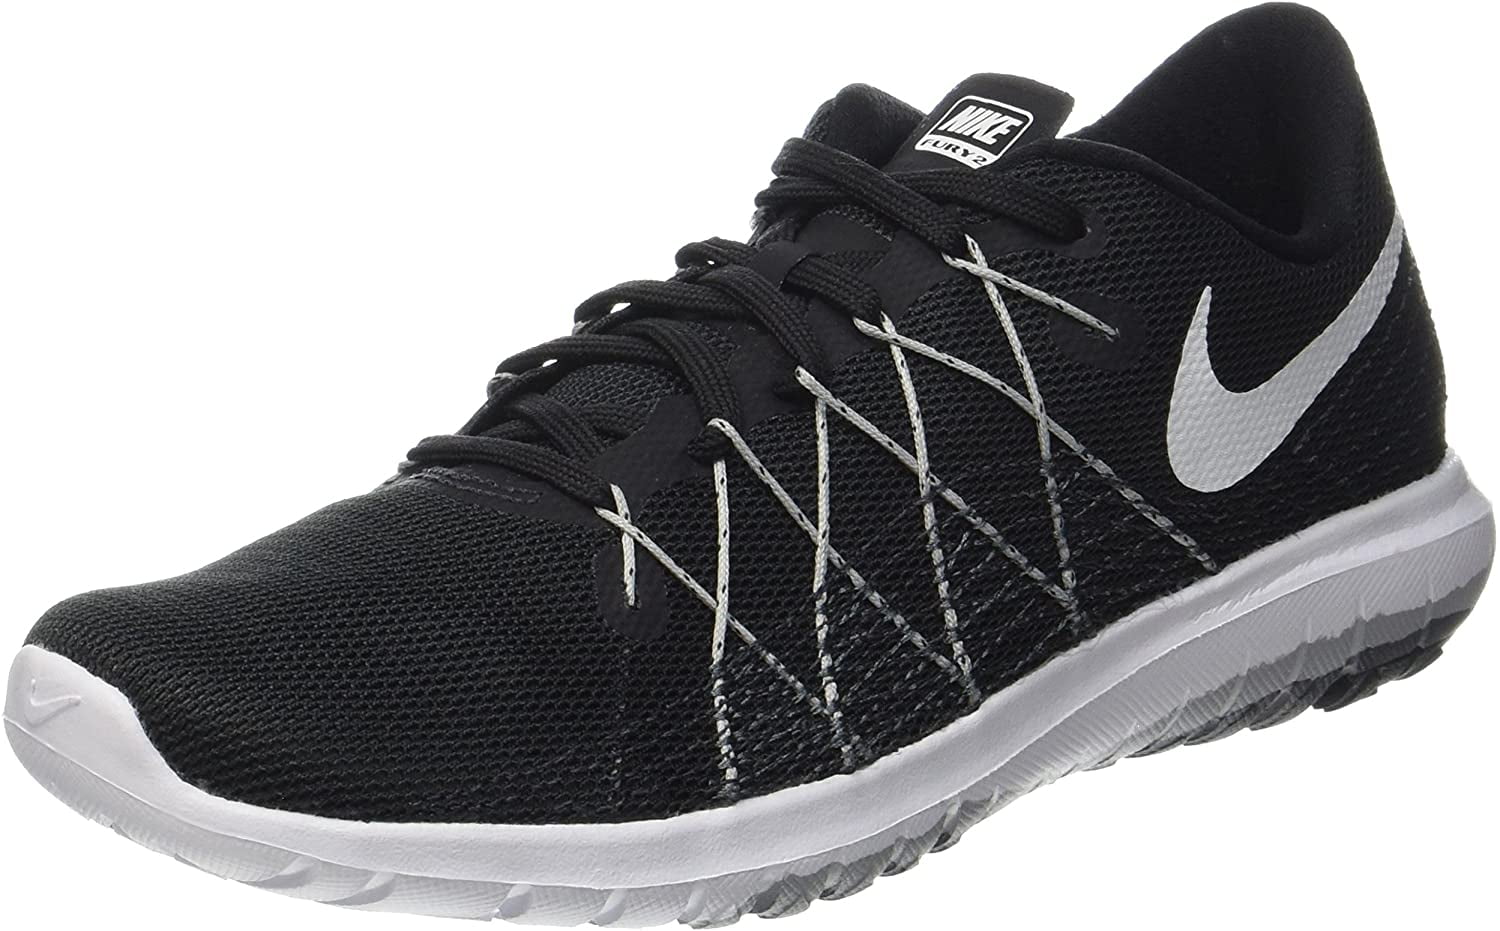 oferta proporción tablero Nike Women's Flex Fury 2 Running Shoe (5 M US, Black/Wolf Grey/White) -  Walmart.com